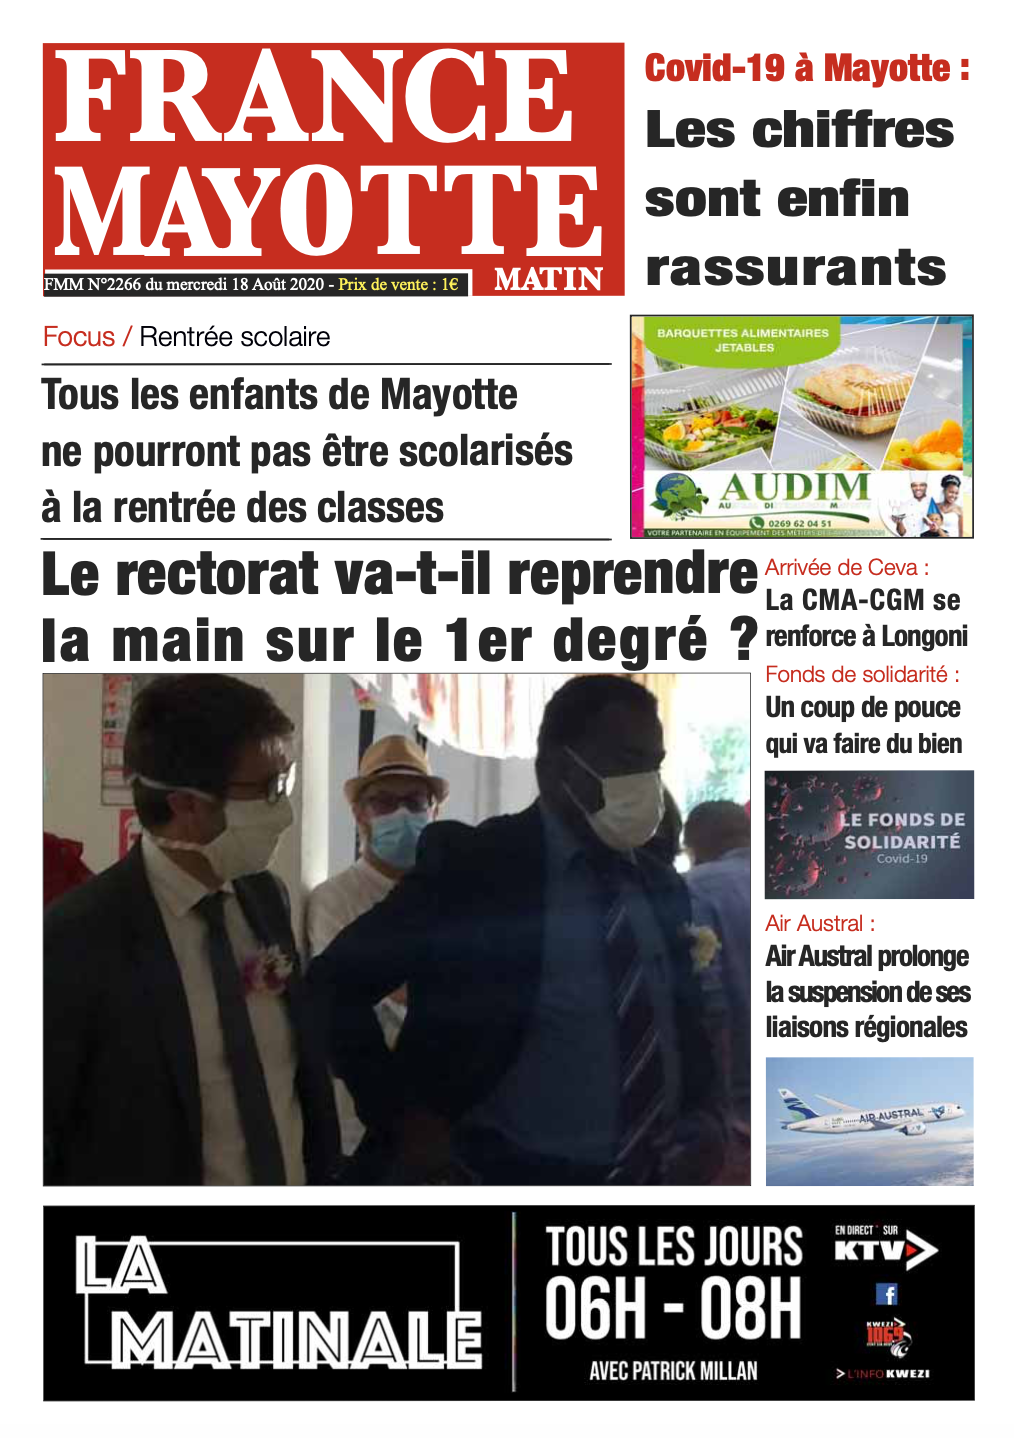 France Mayotte Mercredi 19 août 2020